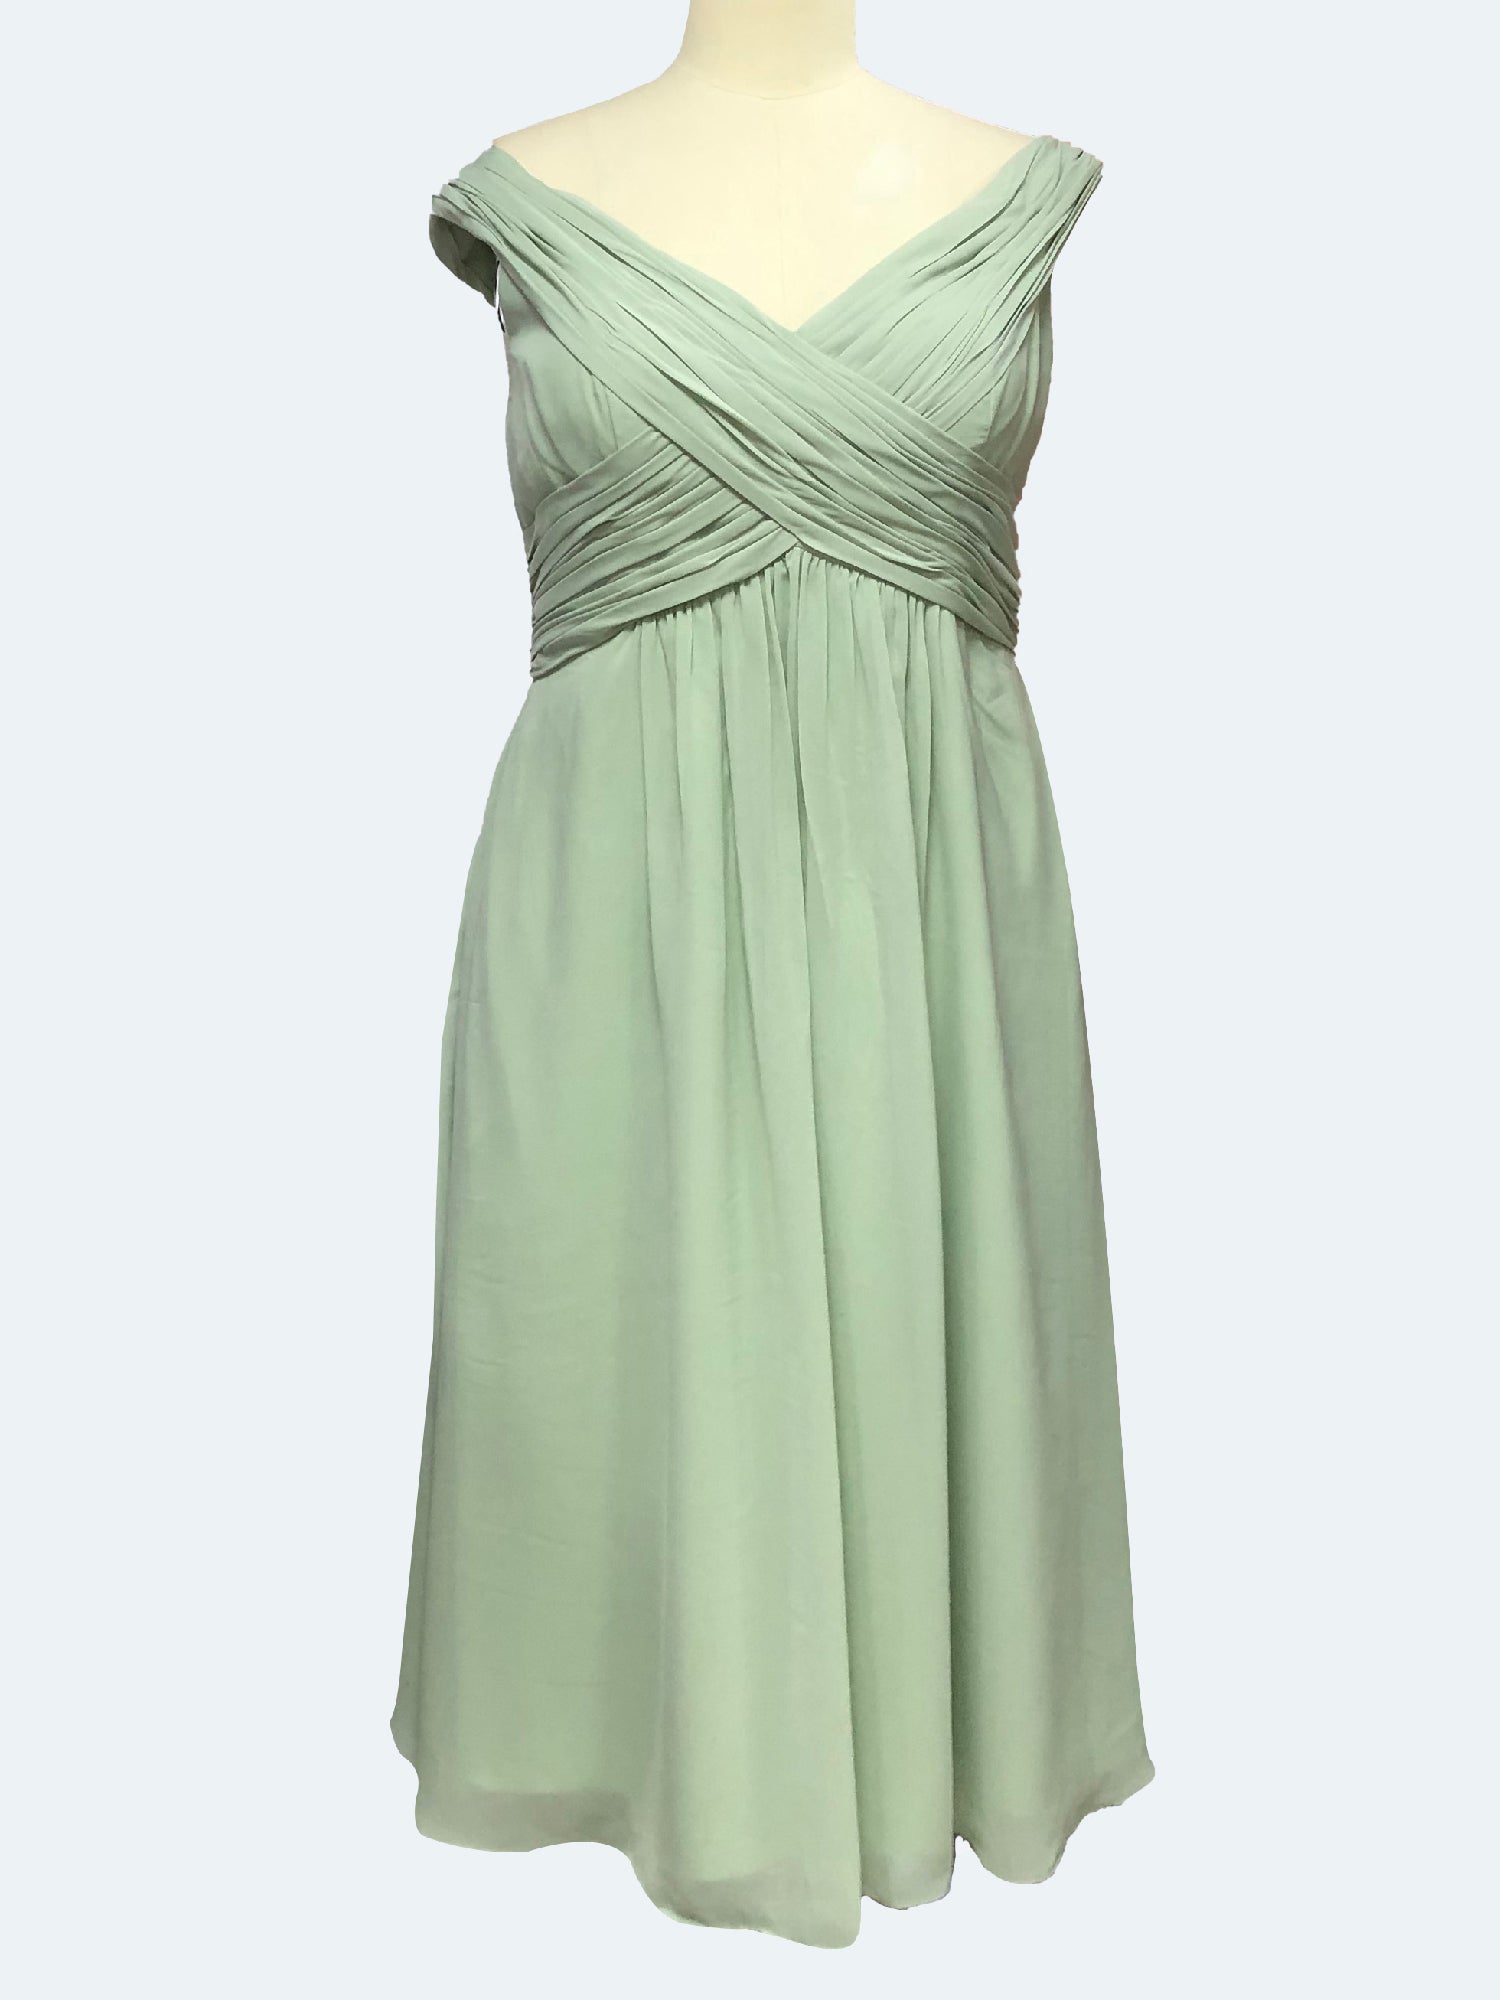 Chiffon Off the Shoulder Cap Sleeves Bridesmaid Dress| Plus Size | 60+ Colors